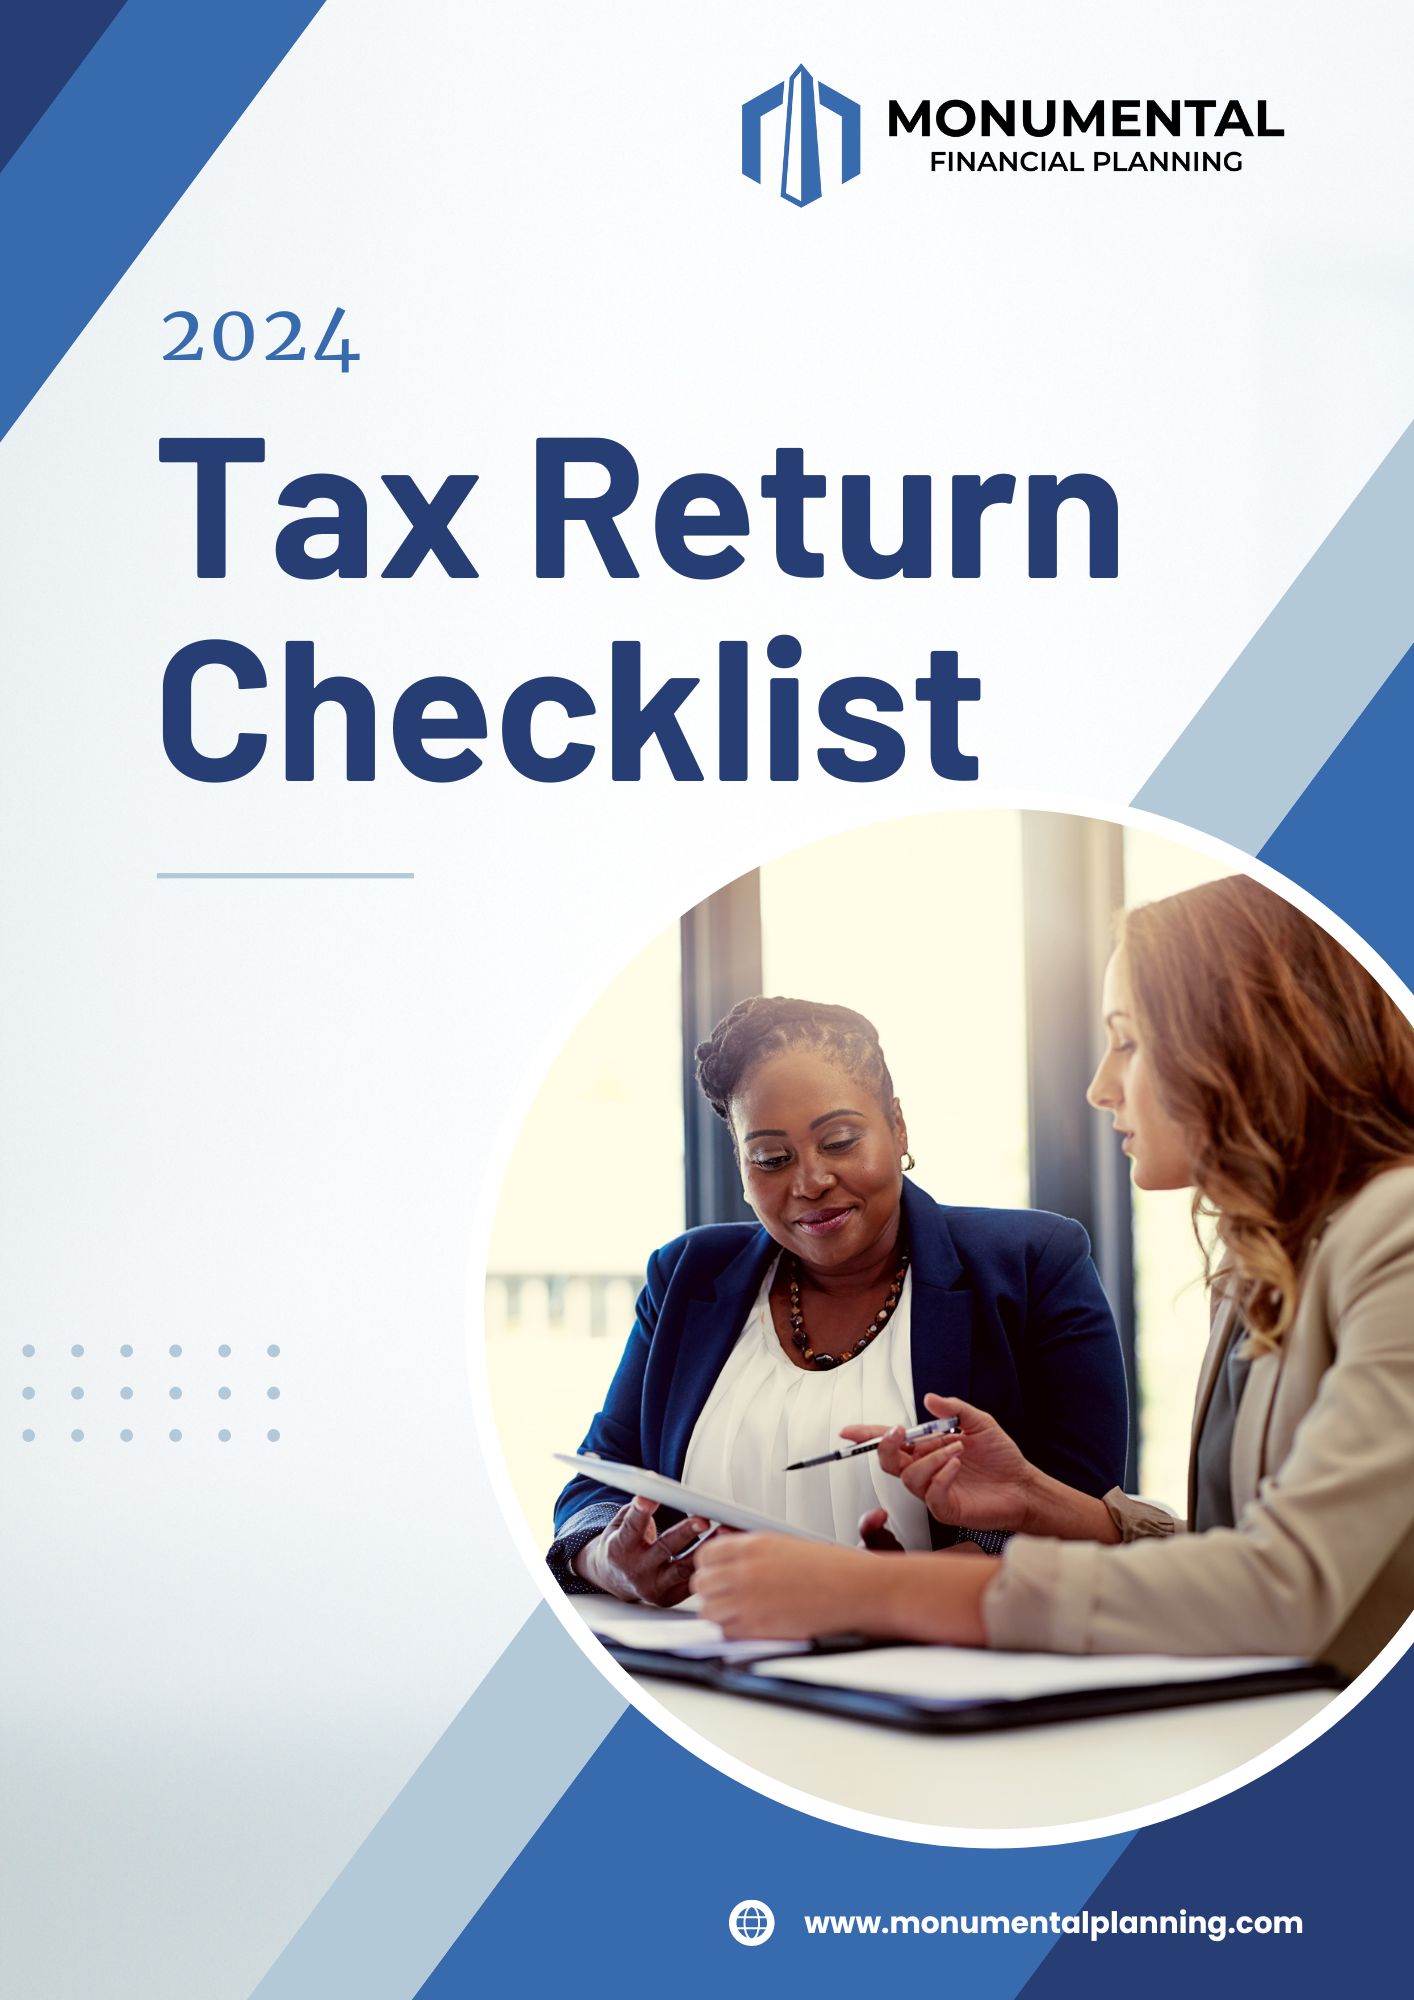 MWP - Tax Return Checklist 2024 Ebook cover